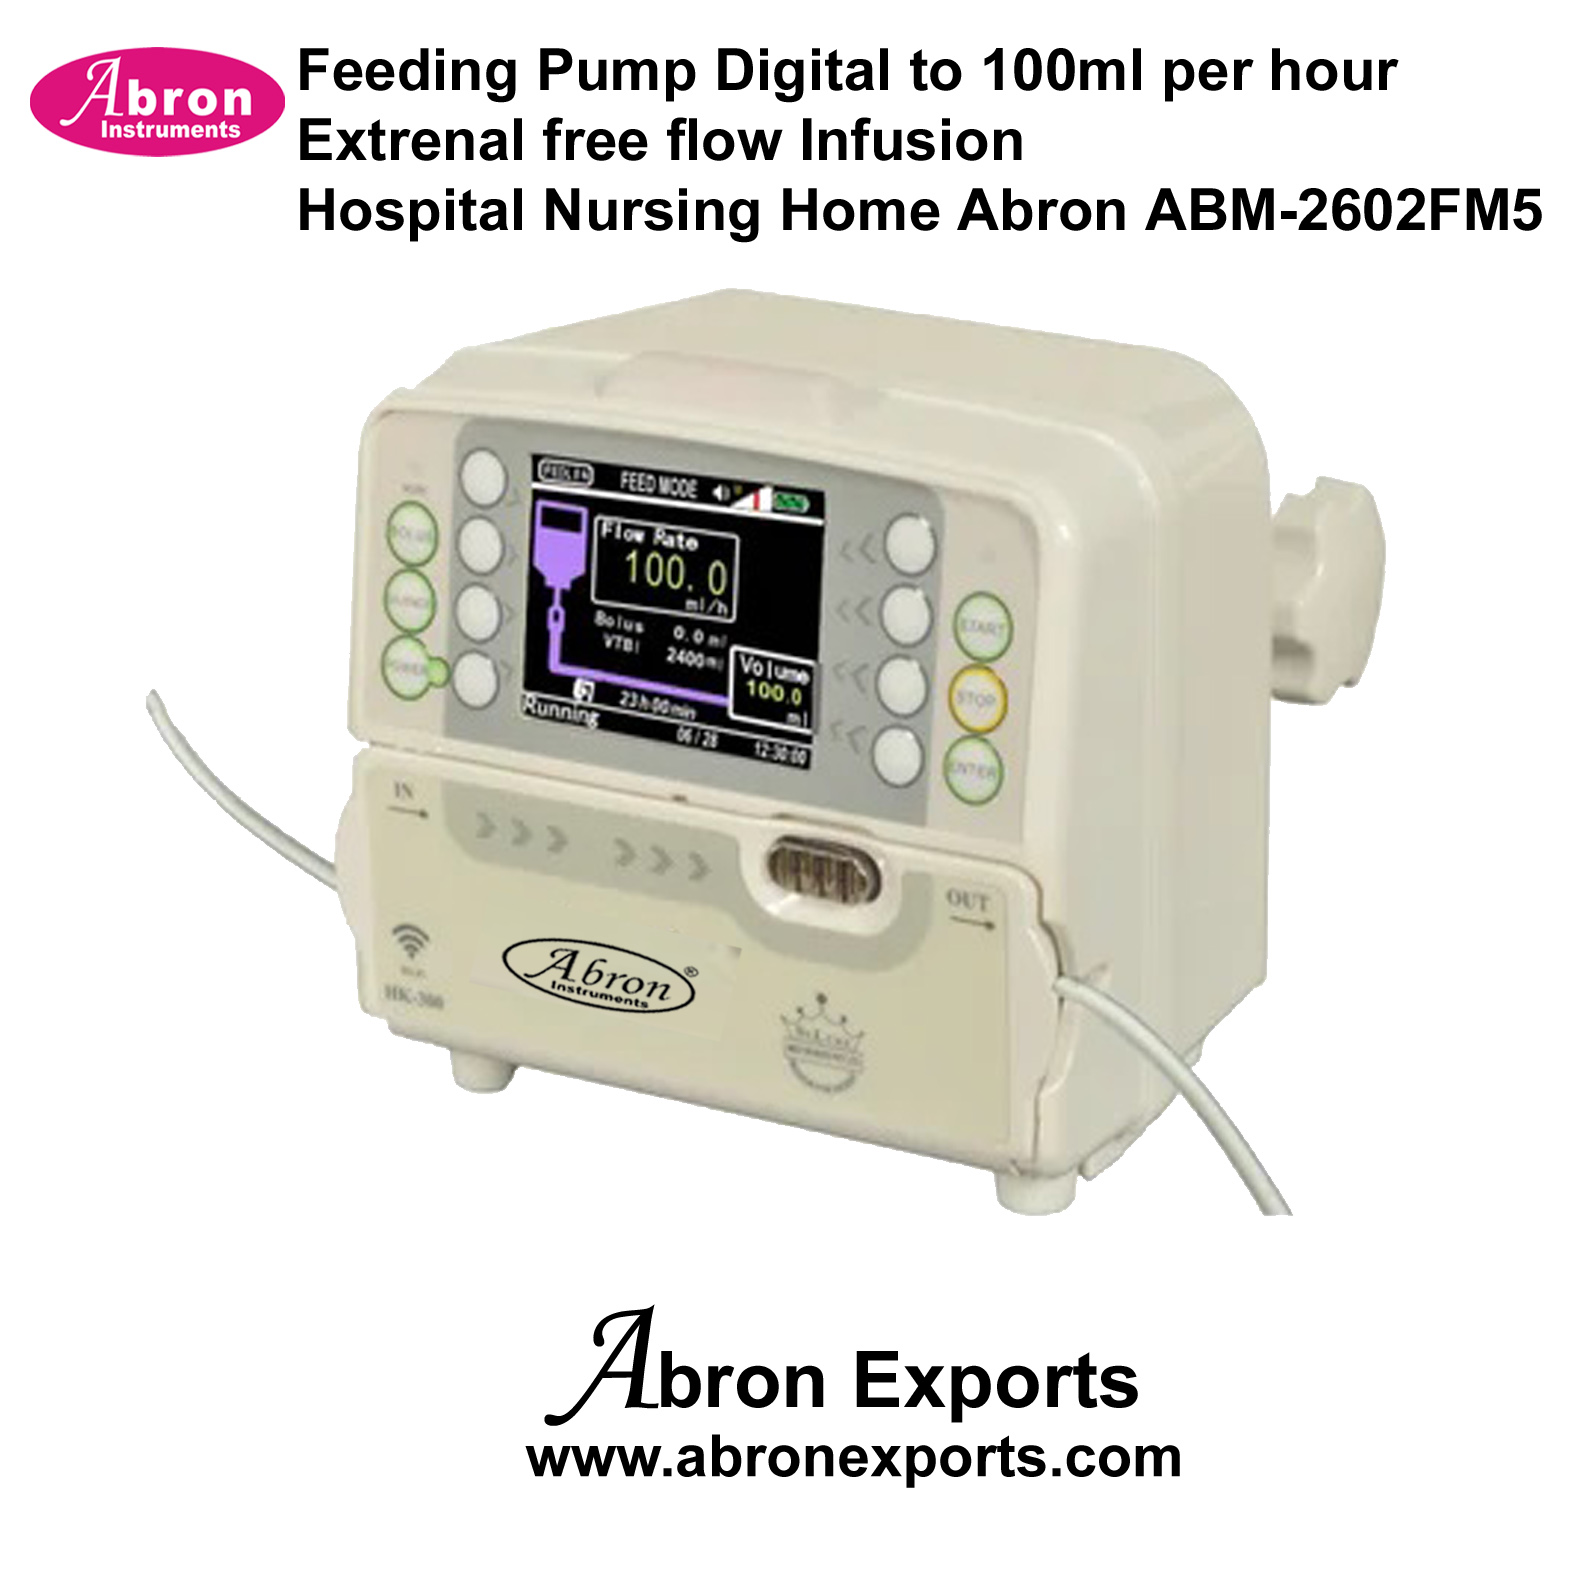 Feeding Pump Digital to 100ml per hour Extrenal free flow Infusion Hospital Nursing Home Abron ABM-2602FM5 